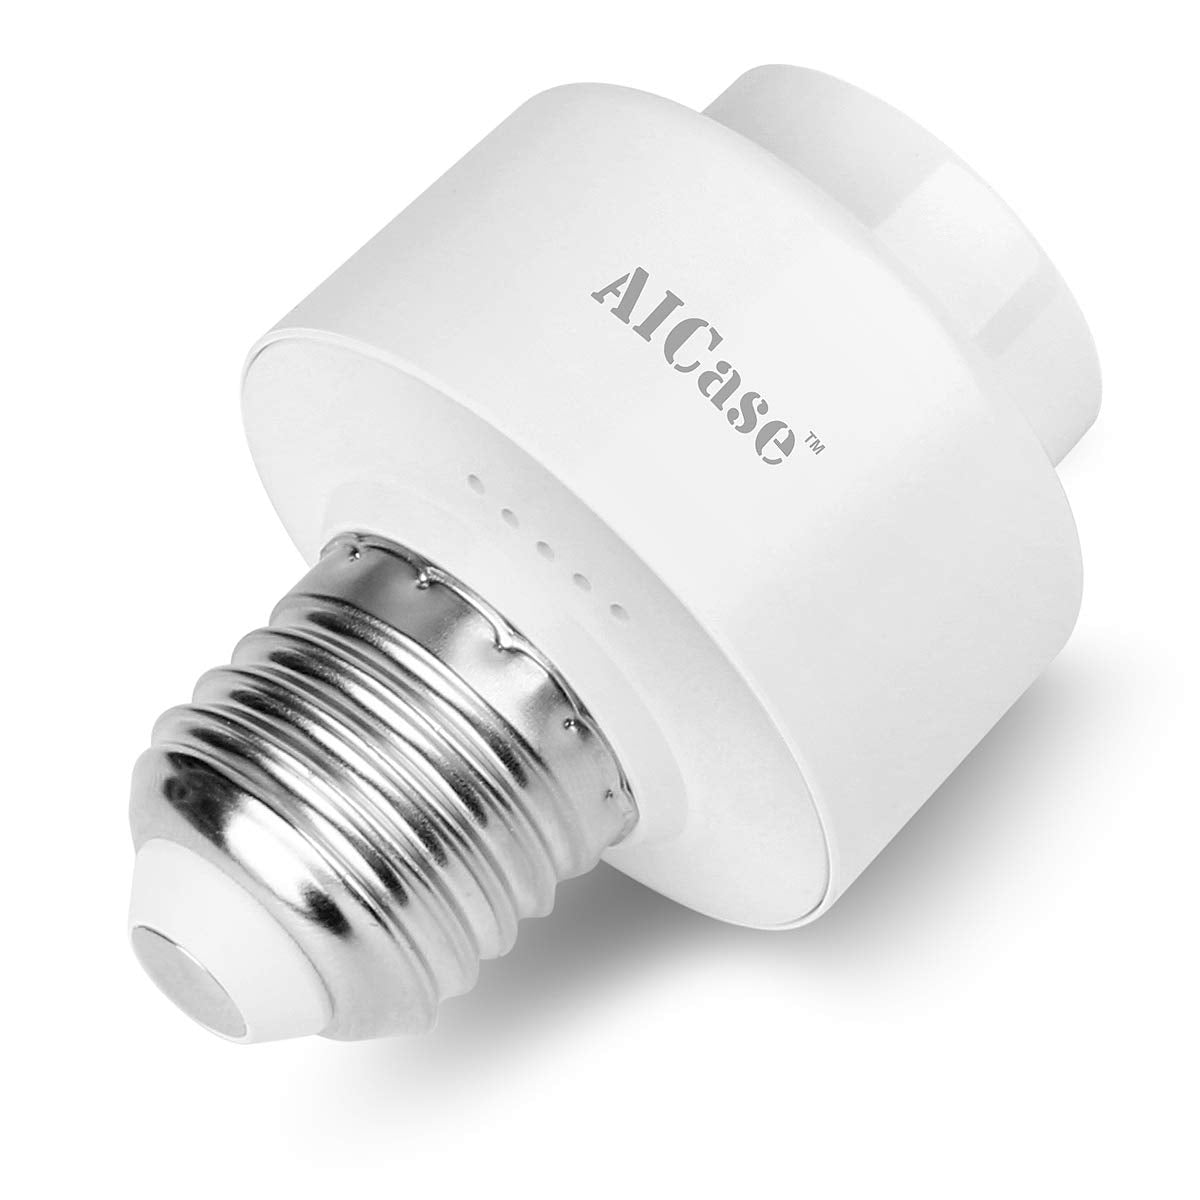 Smart Wifi E27 Light Socket, AICase Intelligent Wlan Home Remote contr –